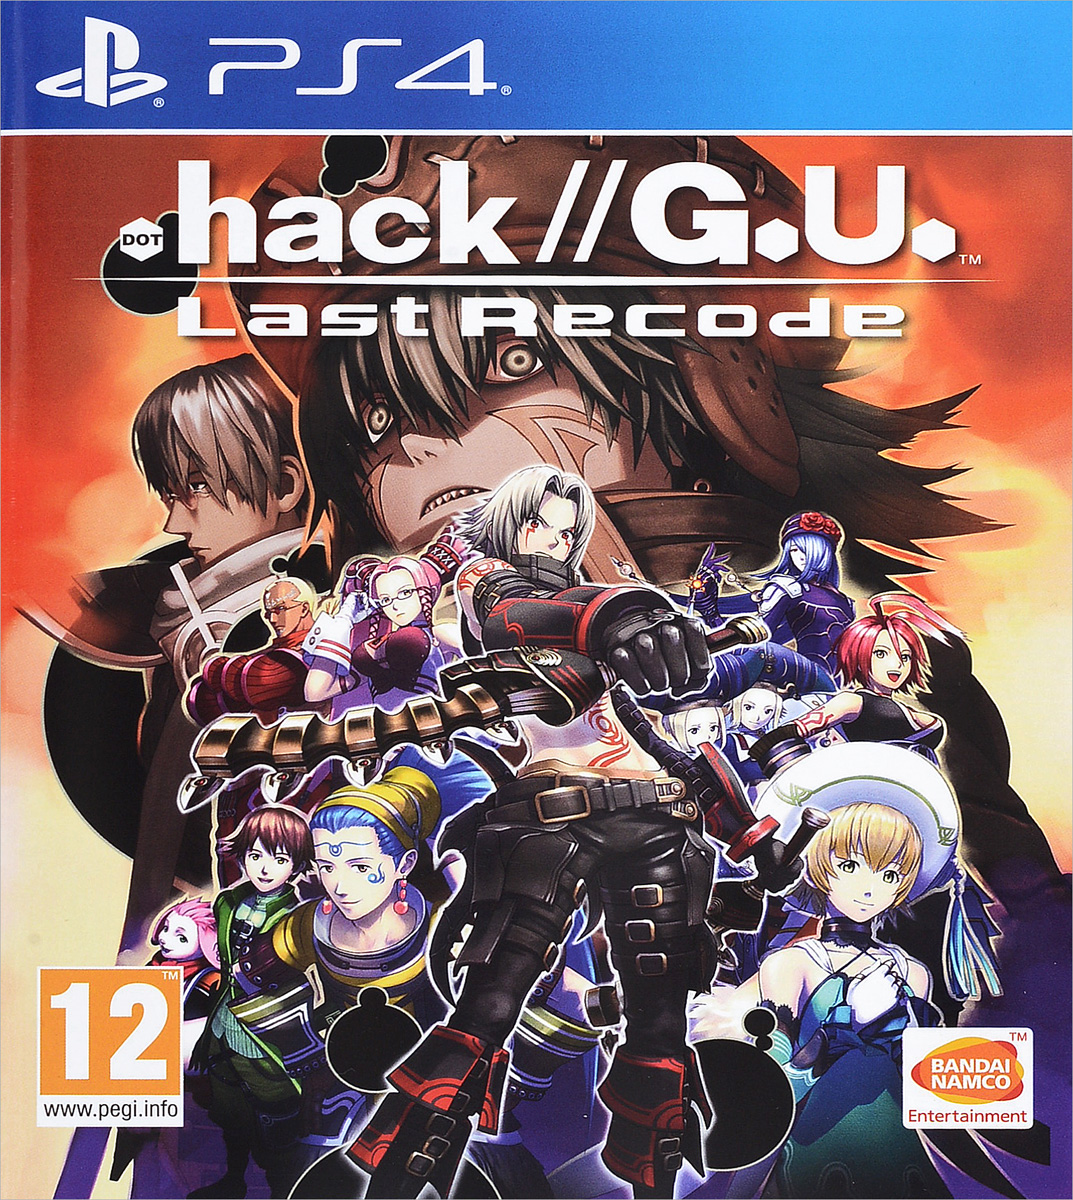 .Hack//G.U. Last Recode (PS4)